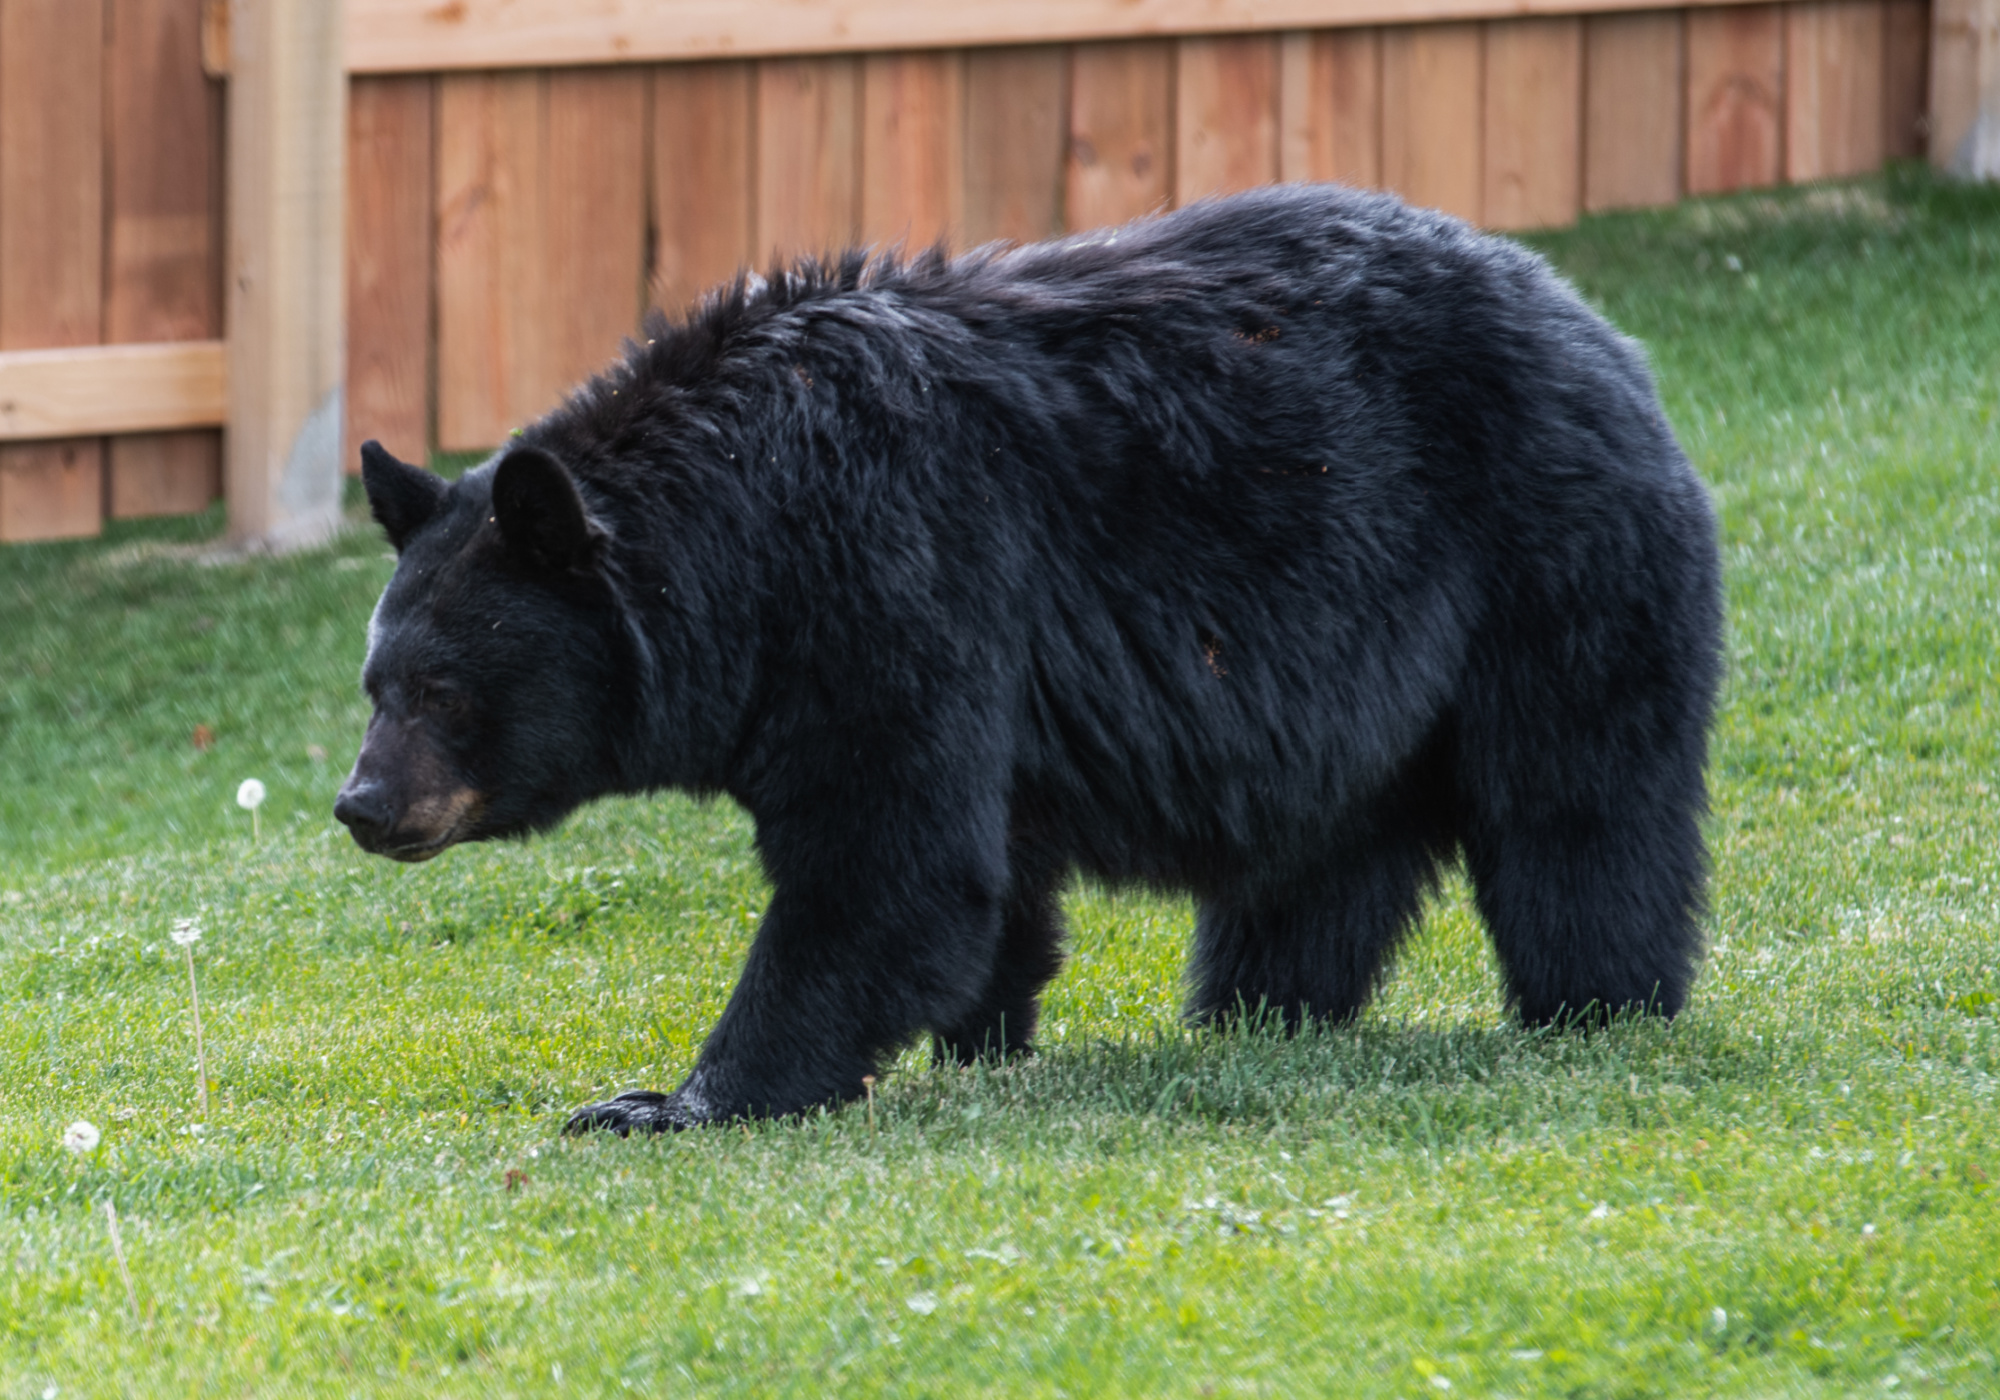 A black bear attacked a woman in her yard in Leavenworth, Washington